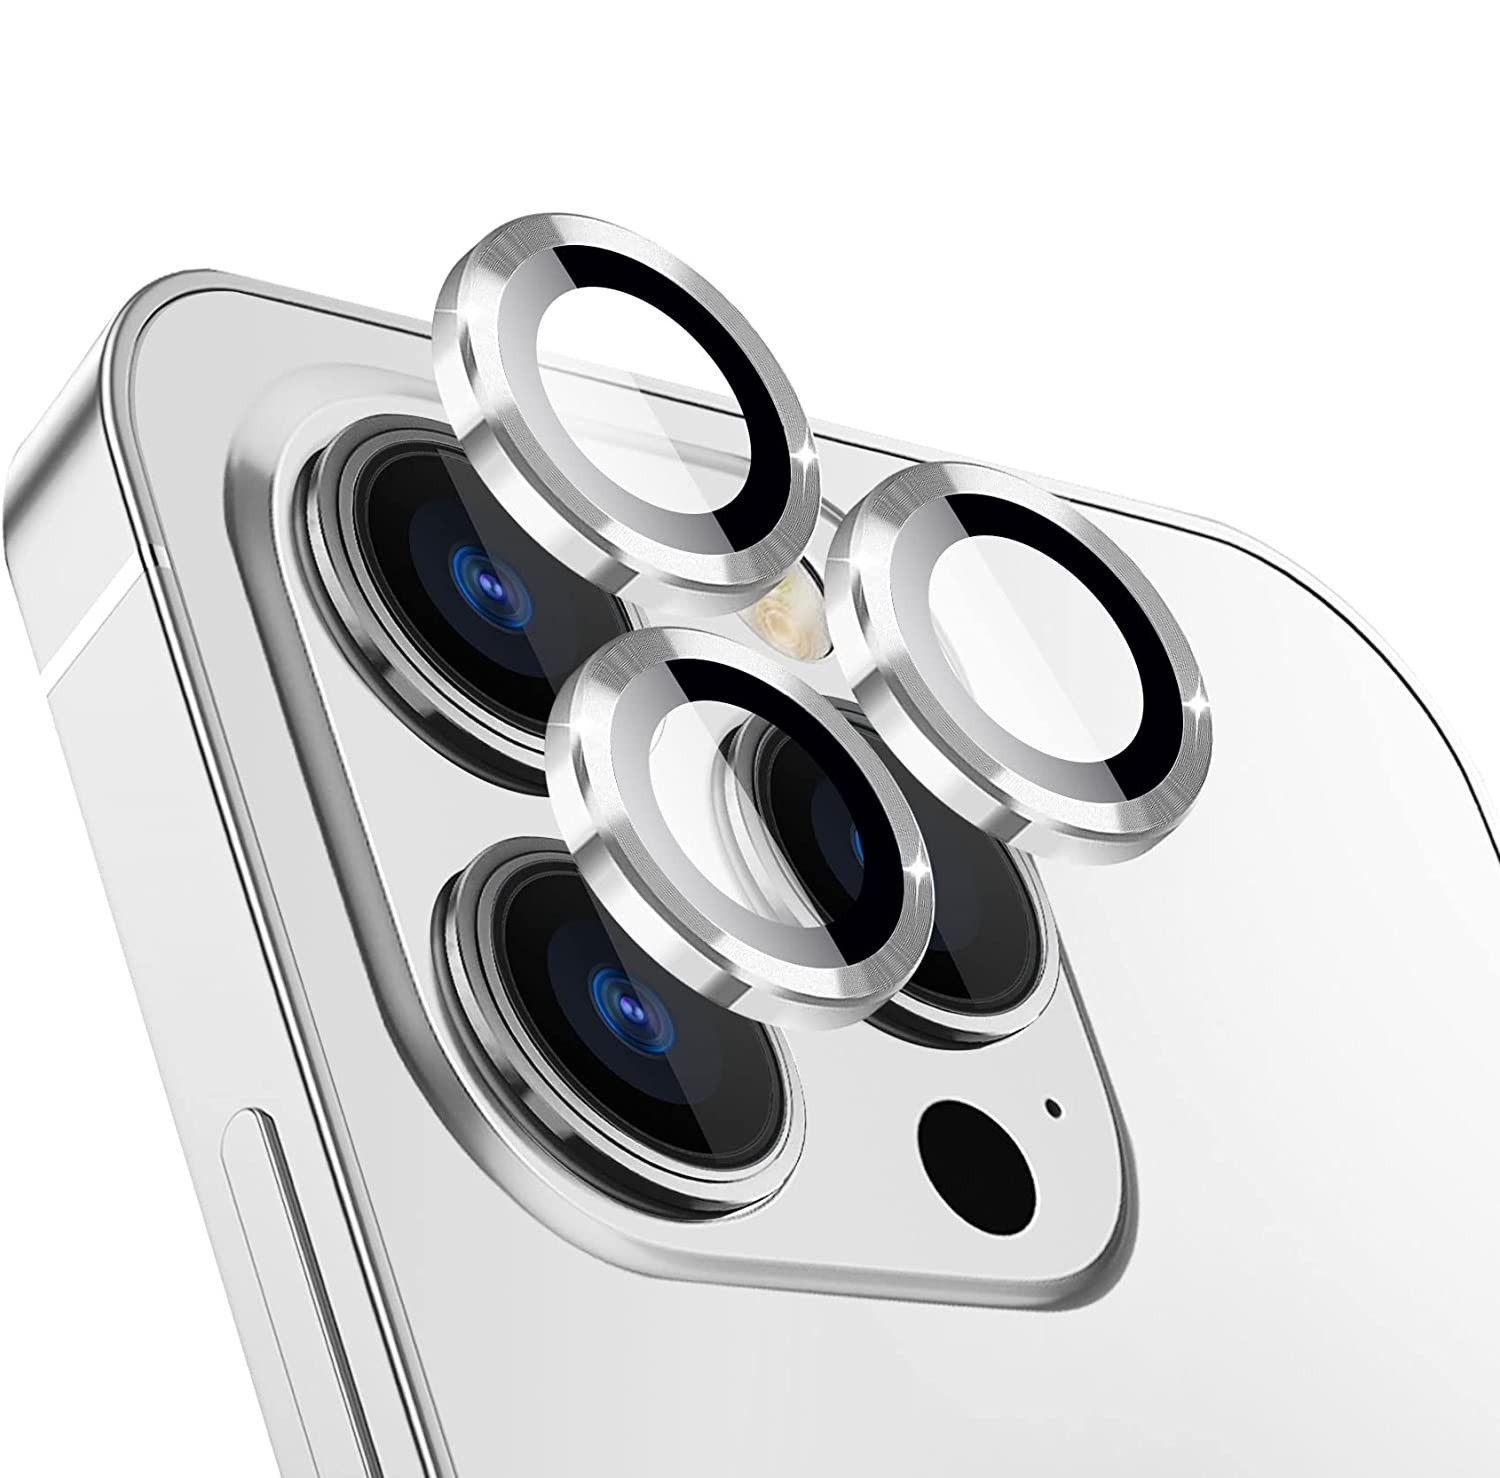 Sticla de protectie camere cu cadru din aluminiu pentru iPhone 12 Pro Max, Argintiu